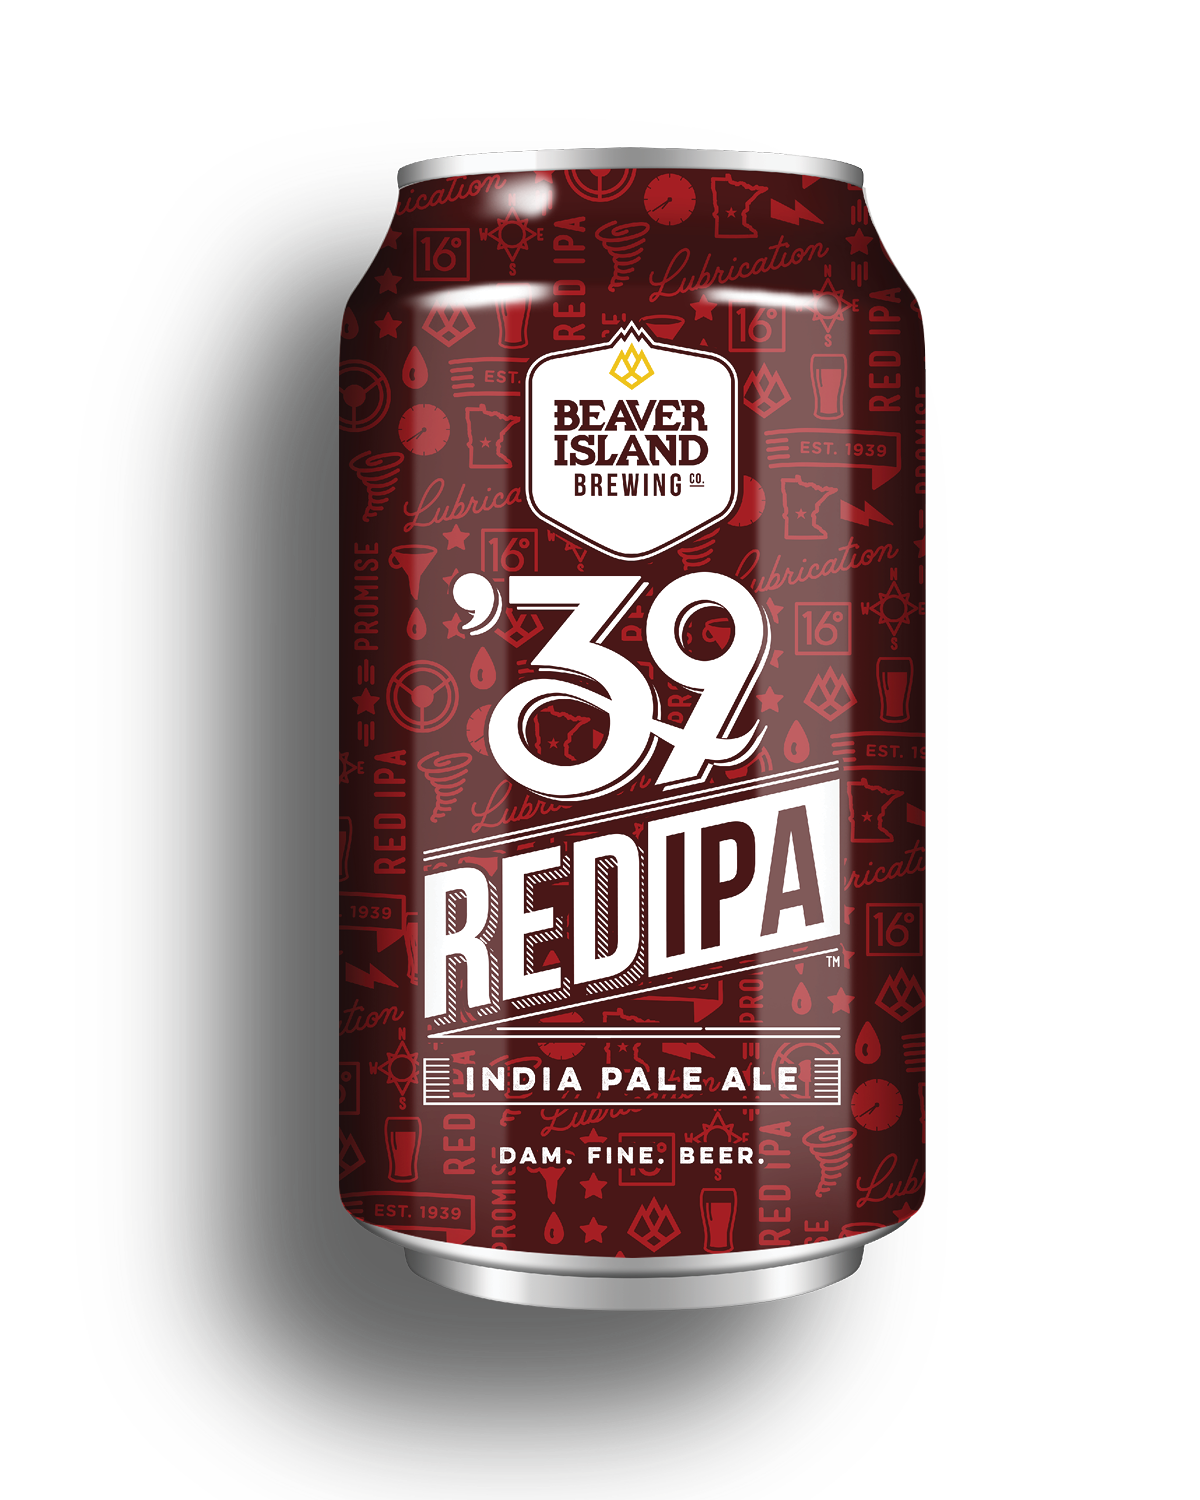 Beaver Island Brewing '39 Red IPA